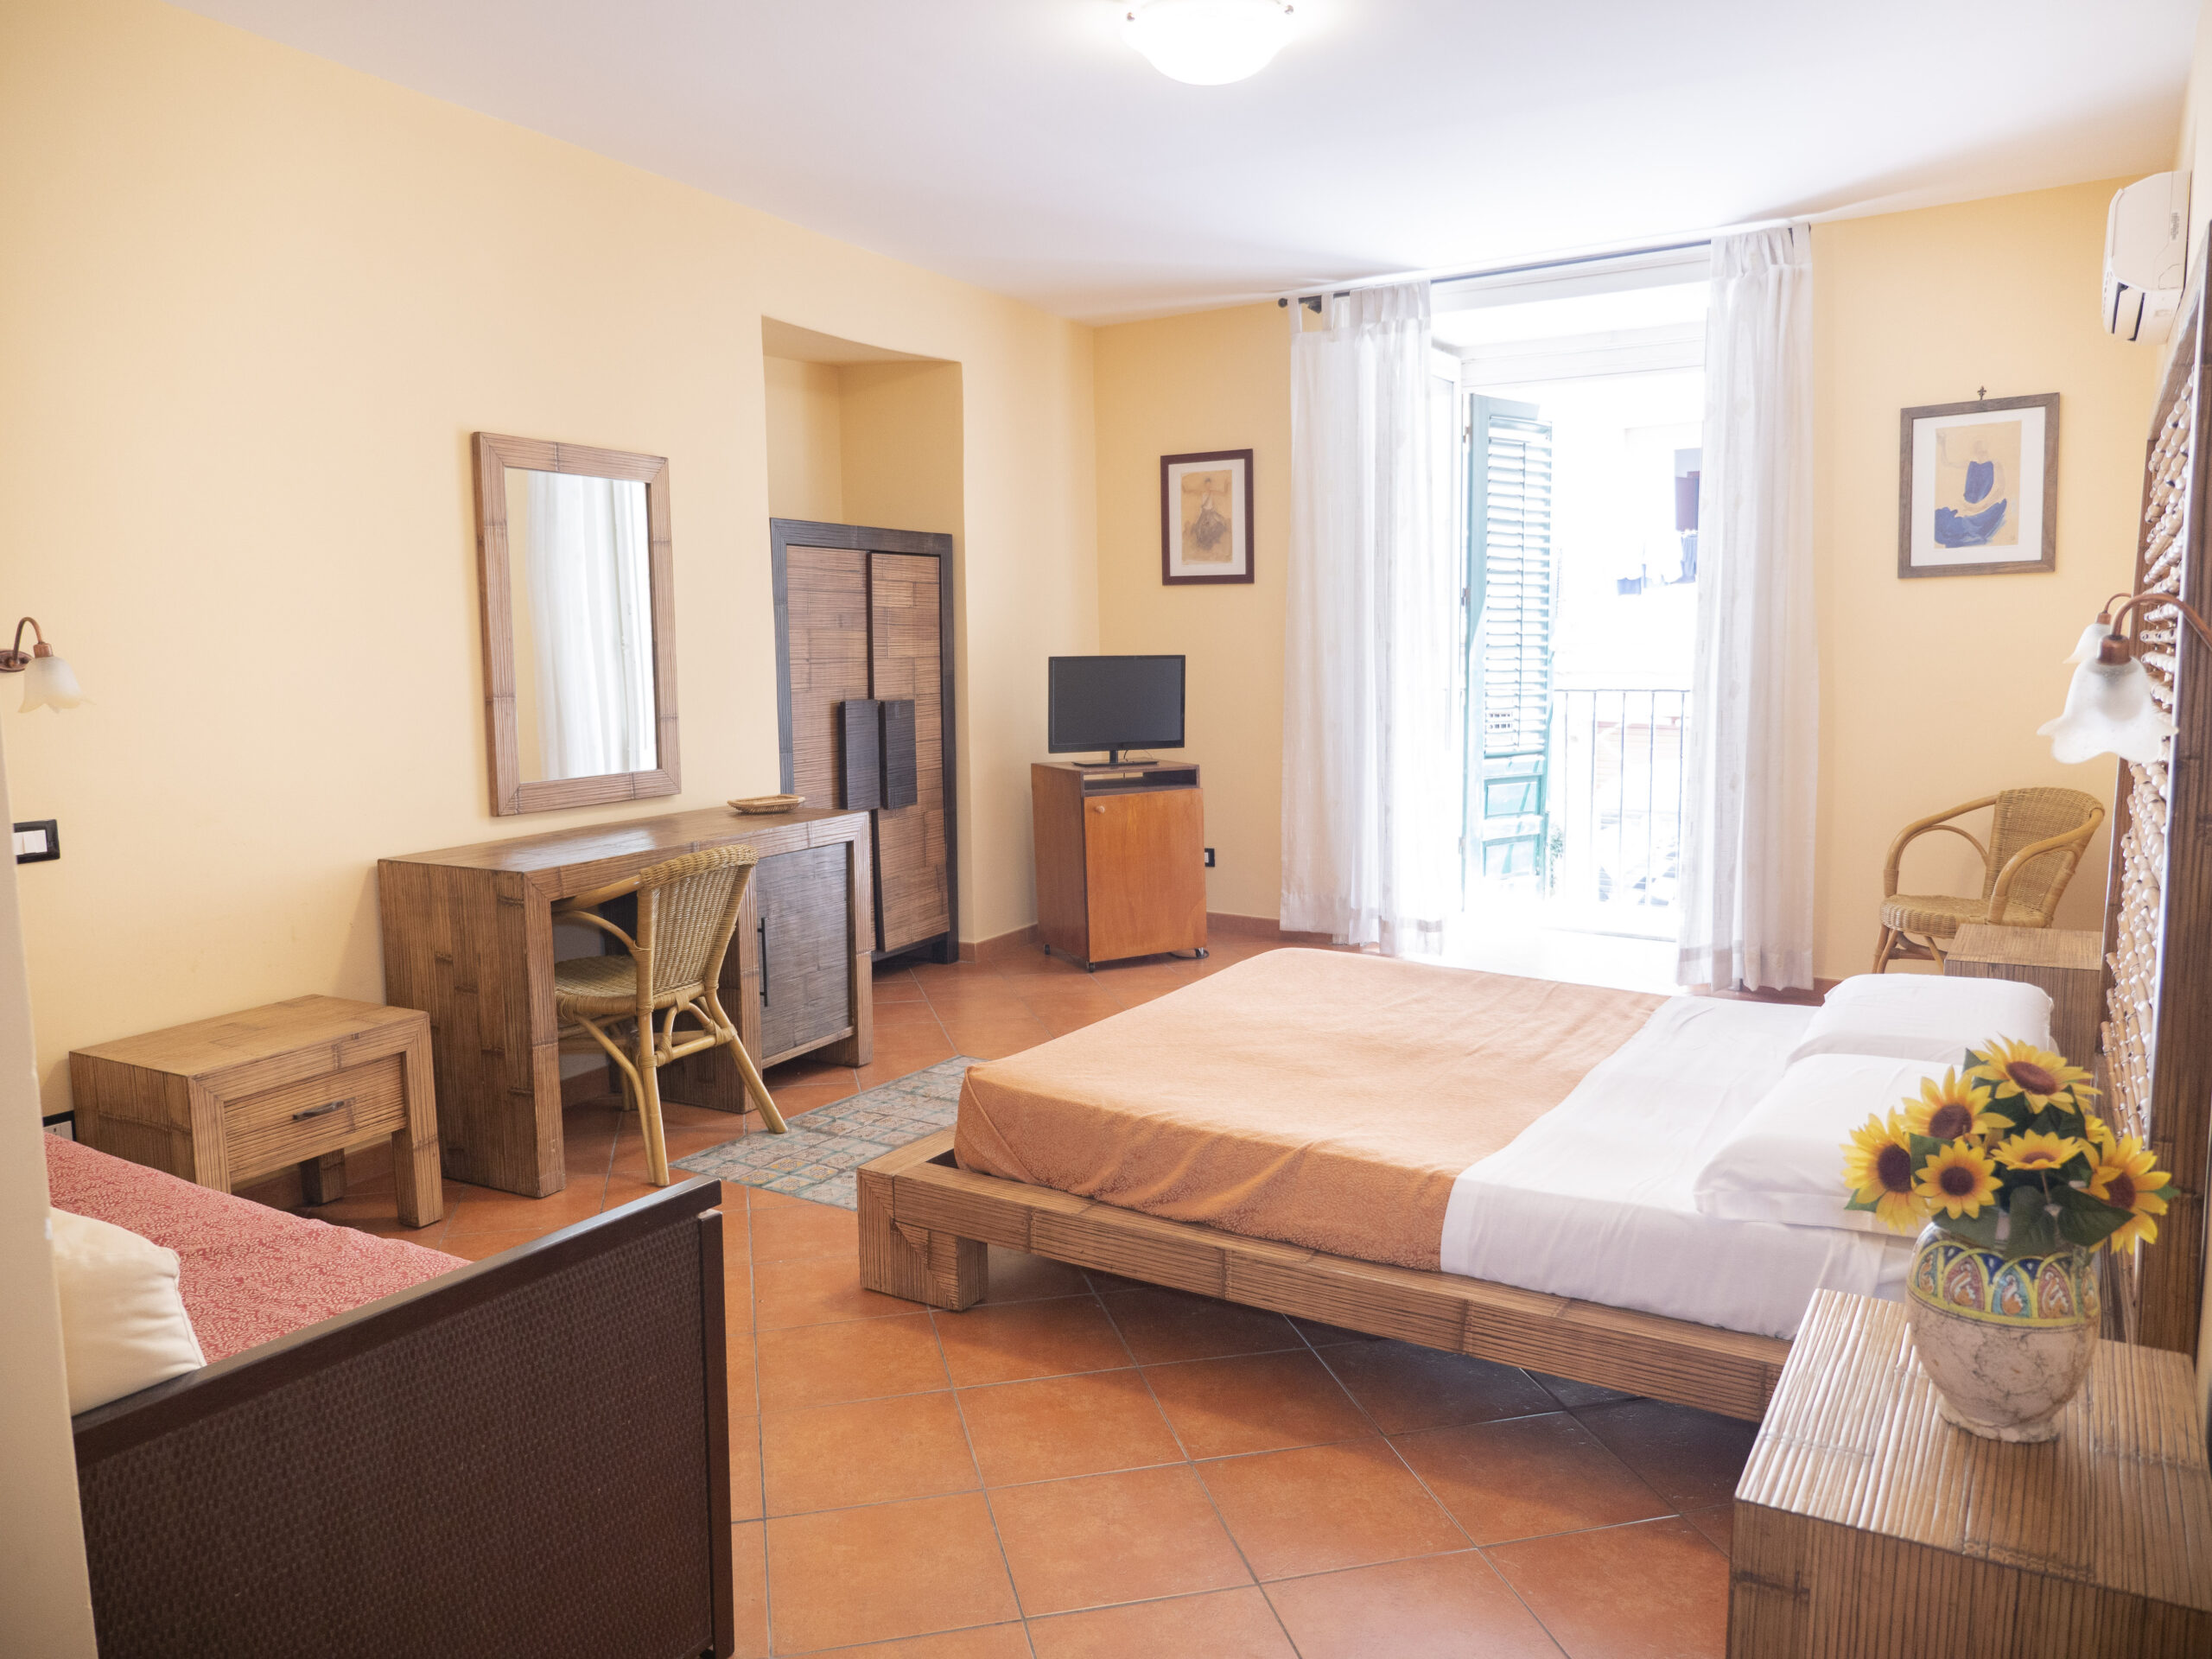 Kalamarina | rooms in Palermo